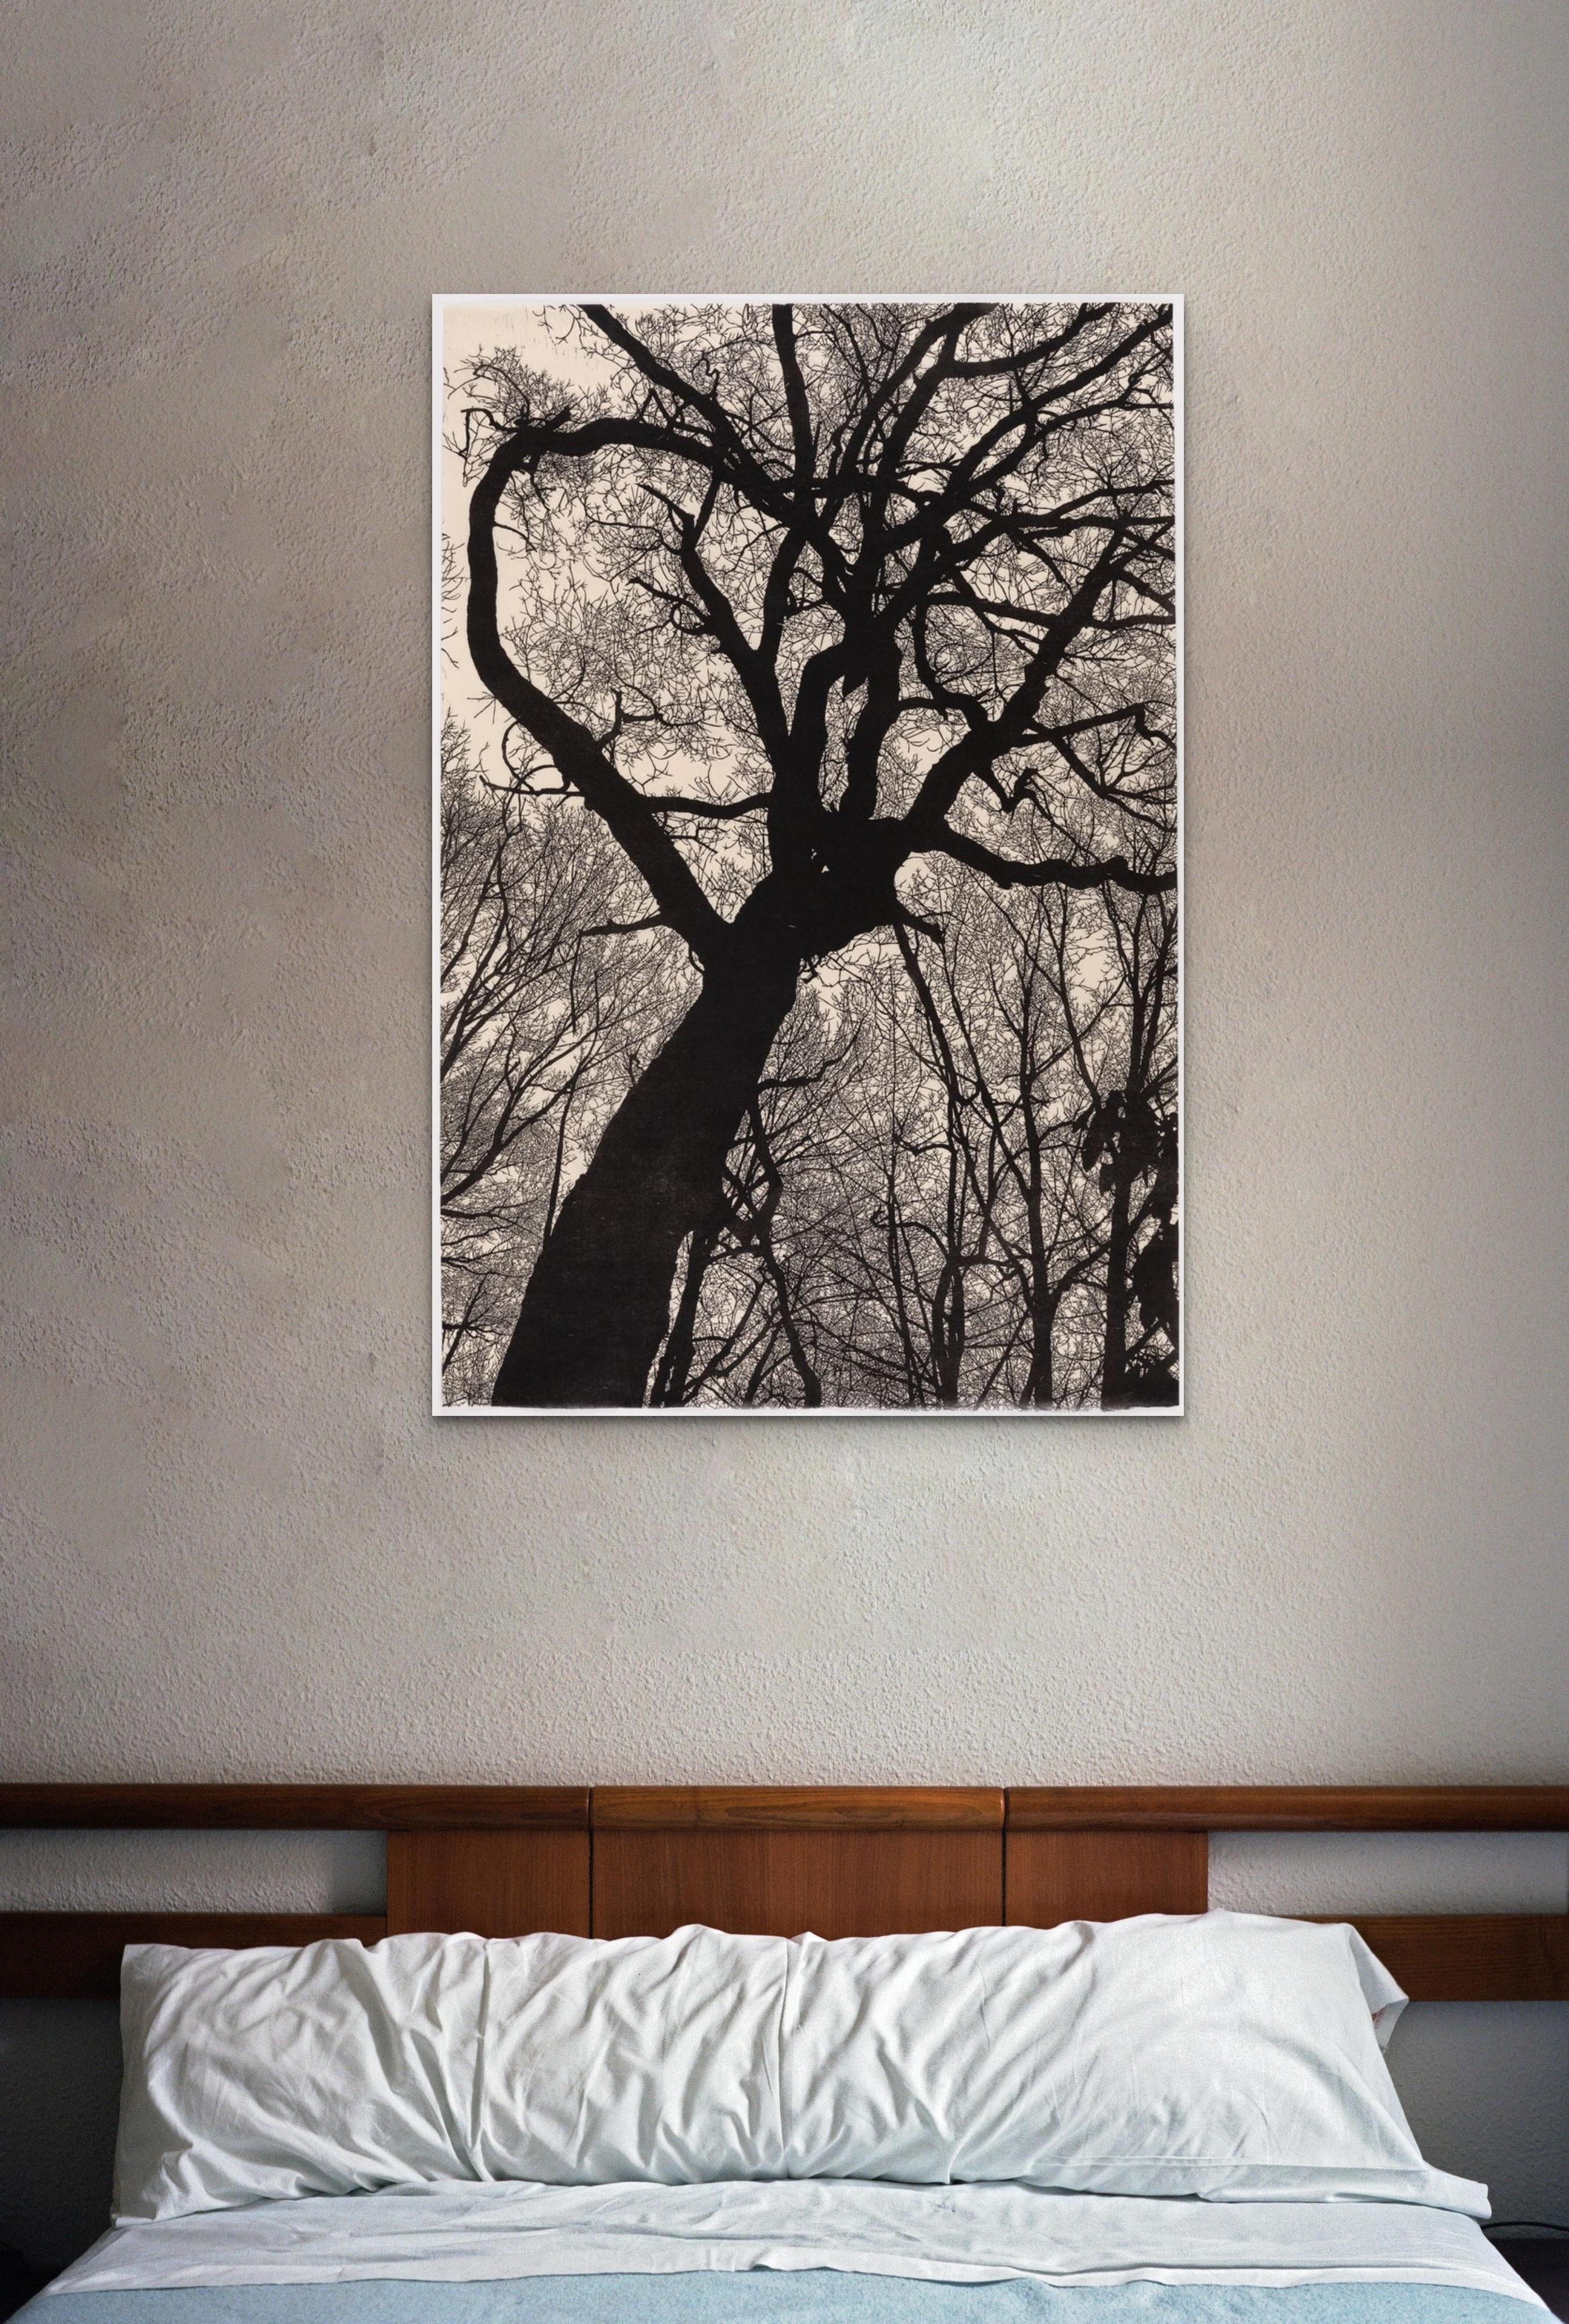 Night Descends on Mountain - Framed Linocut Print of a Tree Silhouette - Black Landscape Print by Hannah Skoonberg